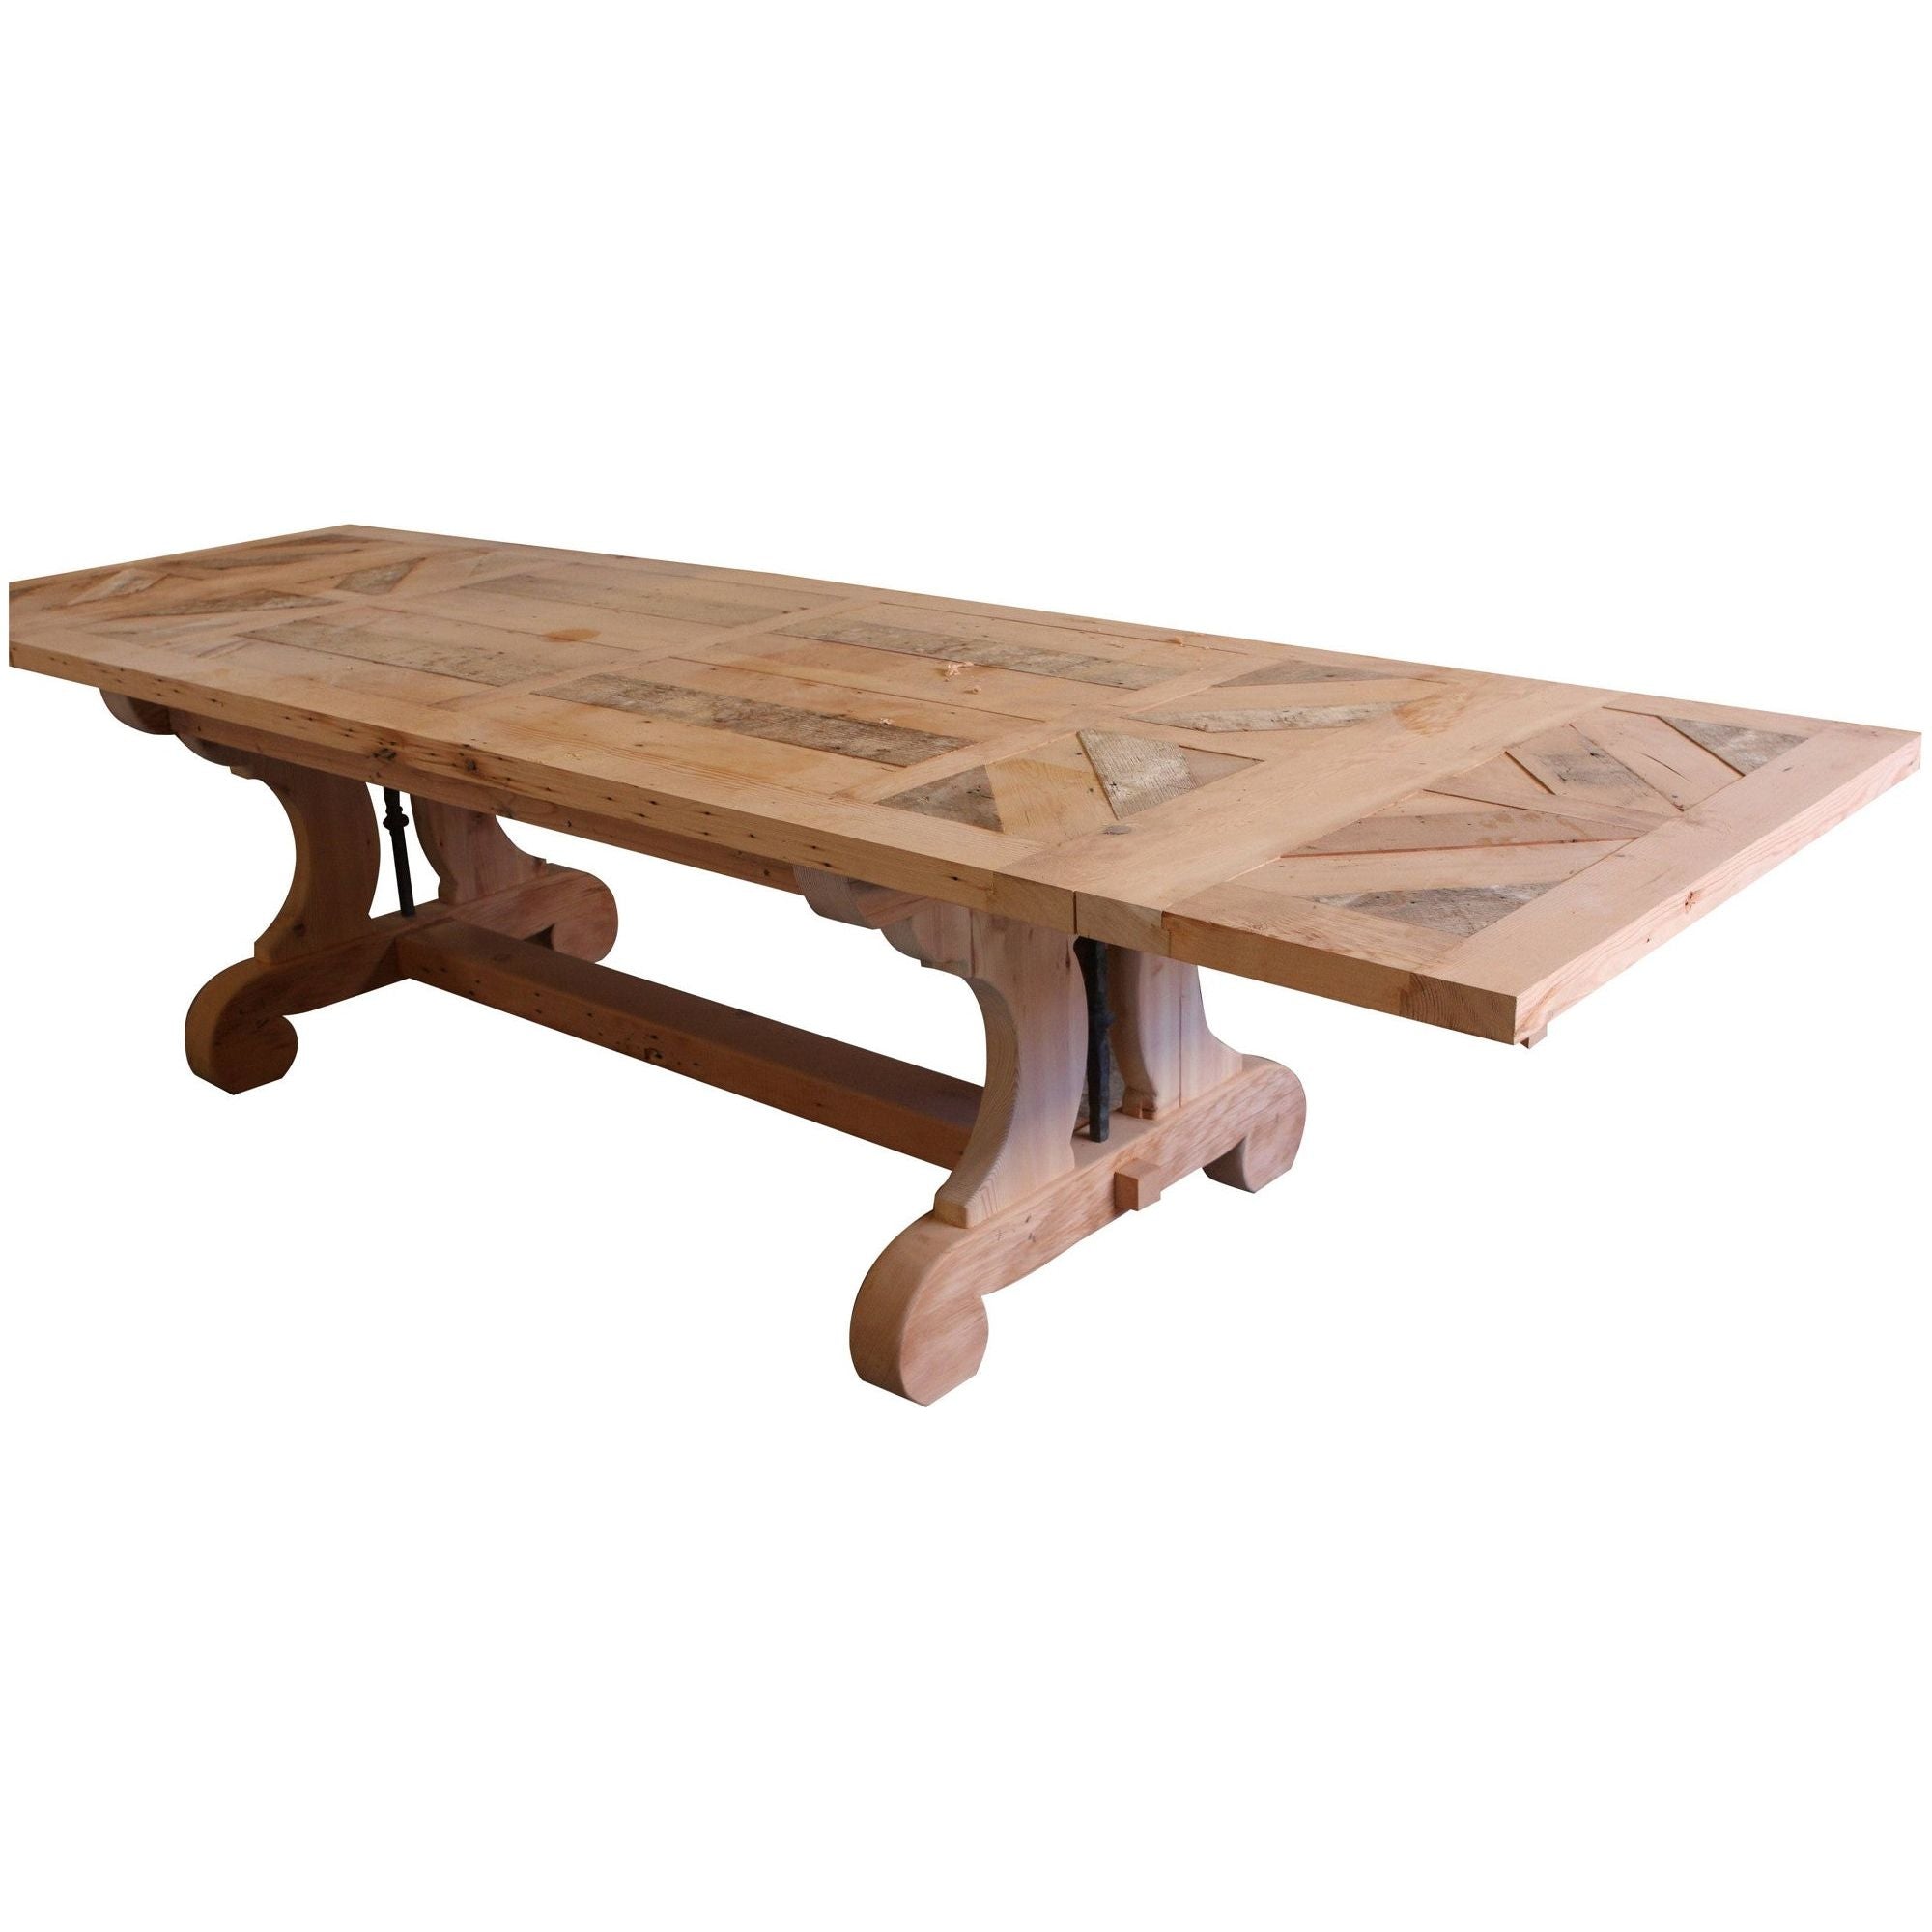 Herringbone Designed Table Top